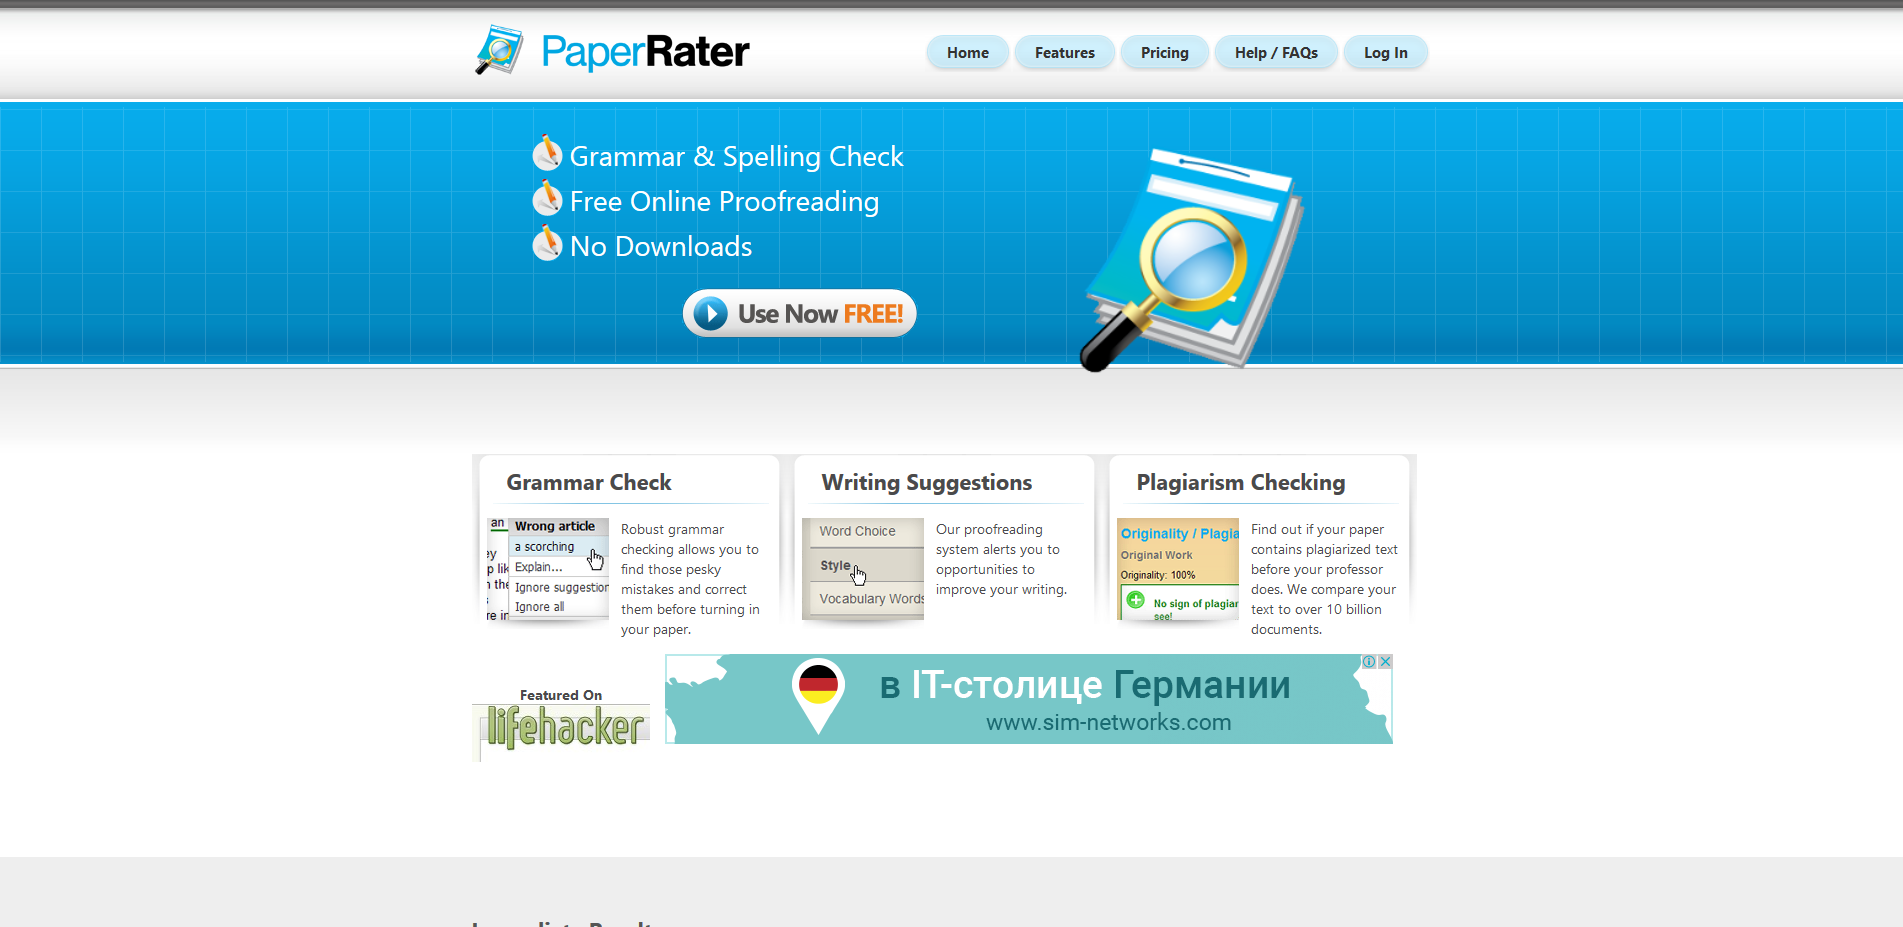 paperrater.com